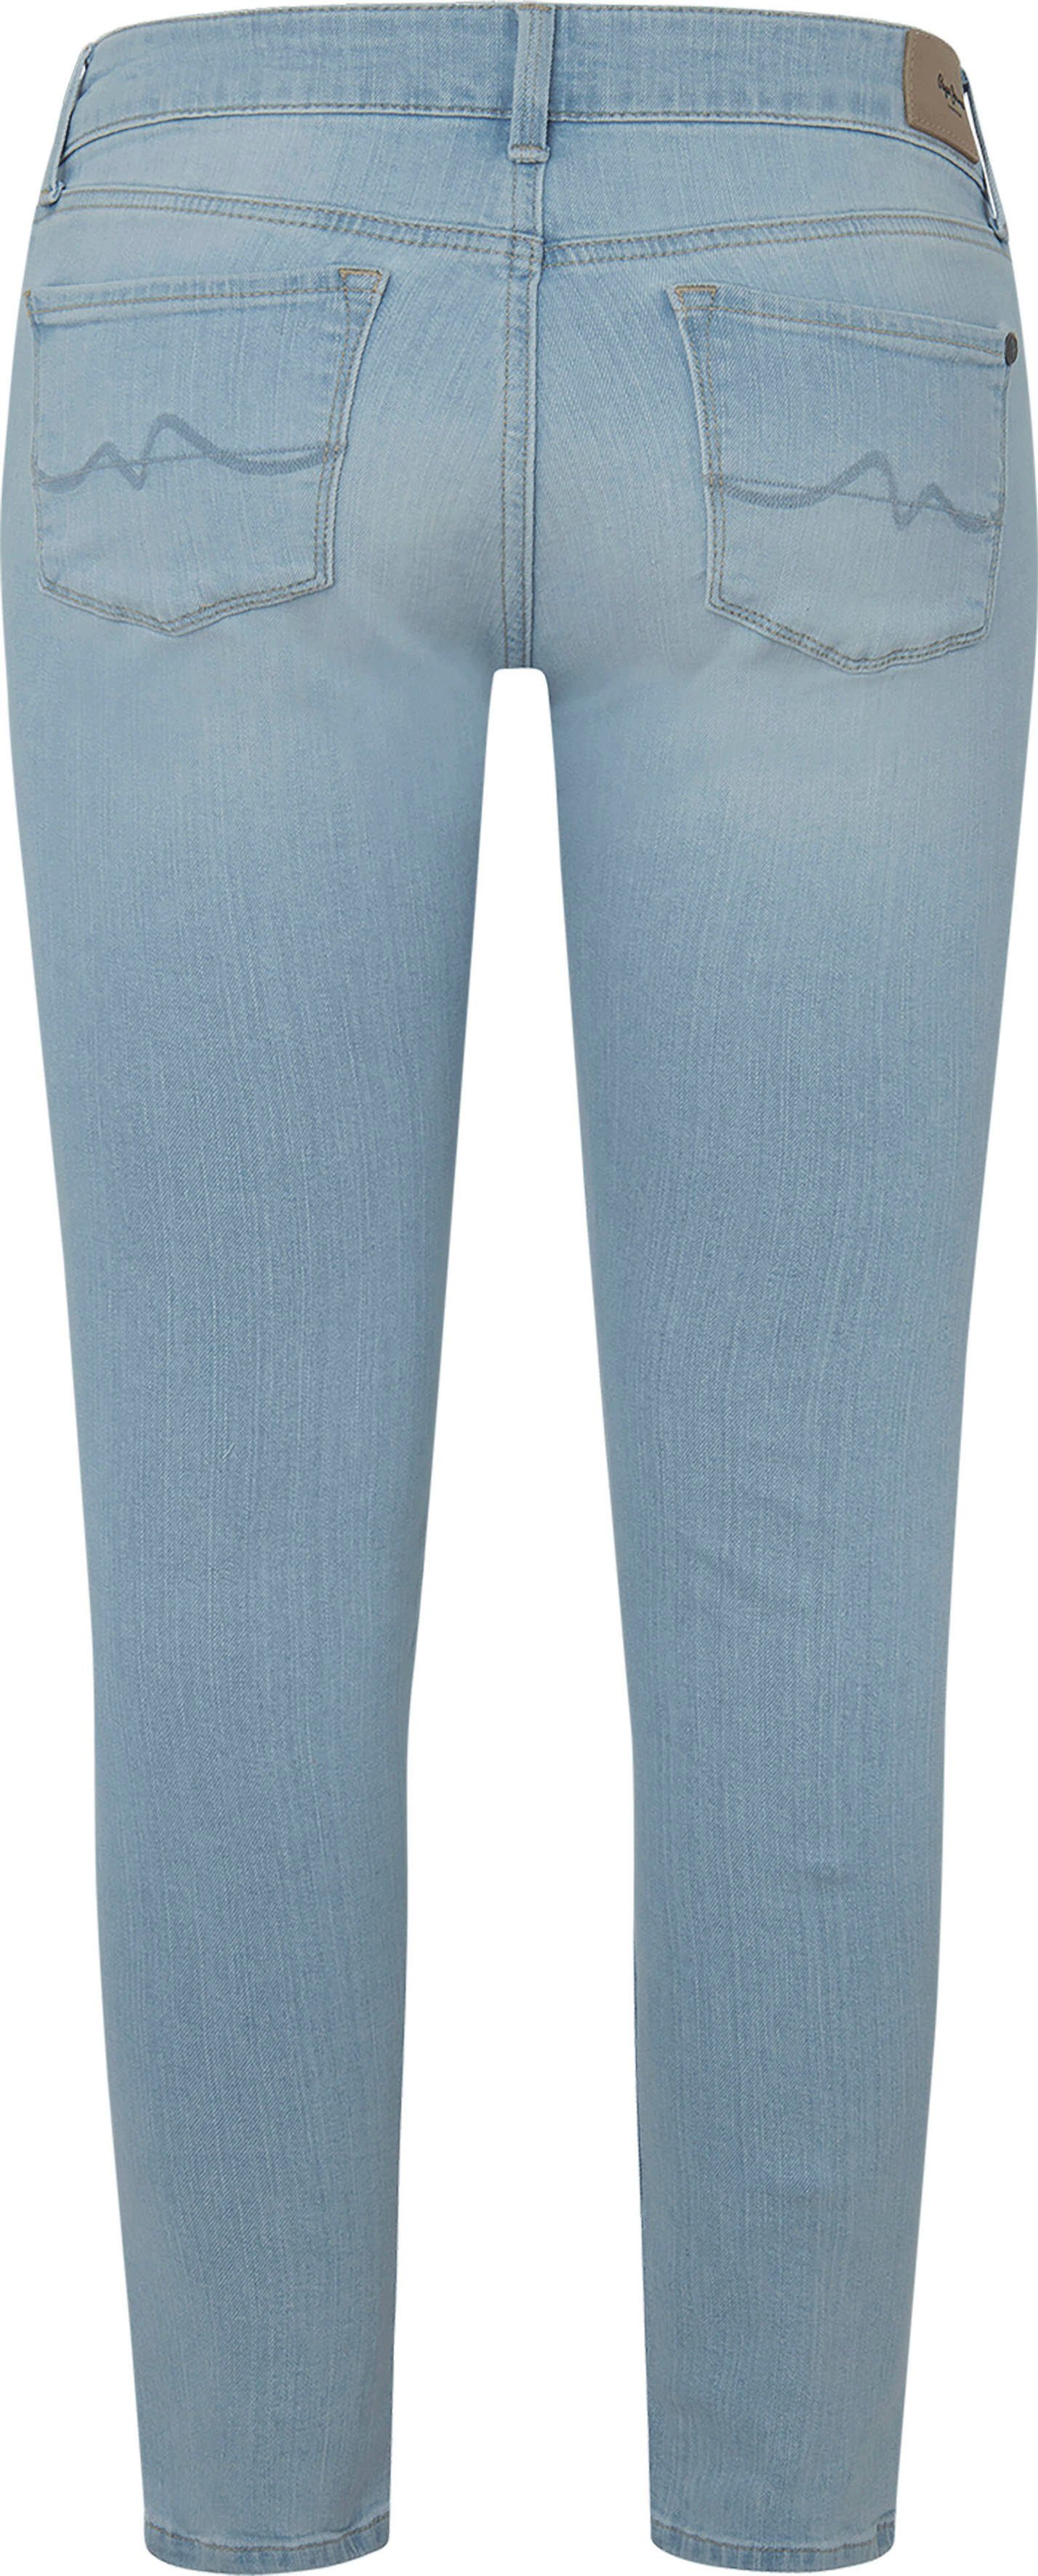 Pepe Jeans im SOHO und hell 1-Knopf Stretch-Anteil Bund 5-Pocket-Stil mit Skinny-fit-Jeans